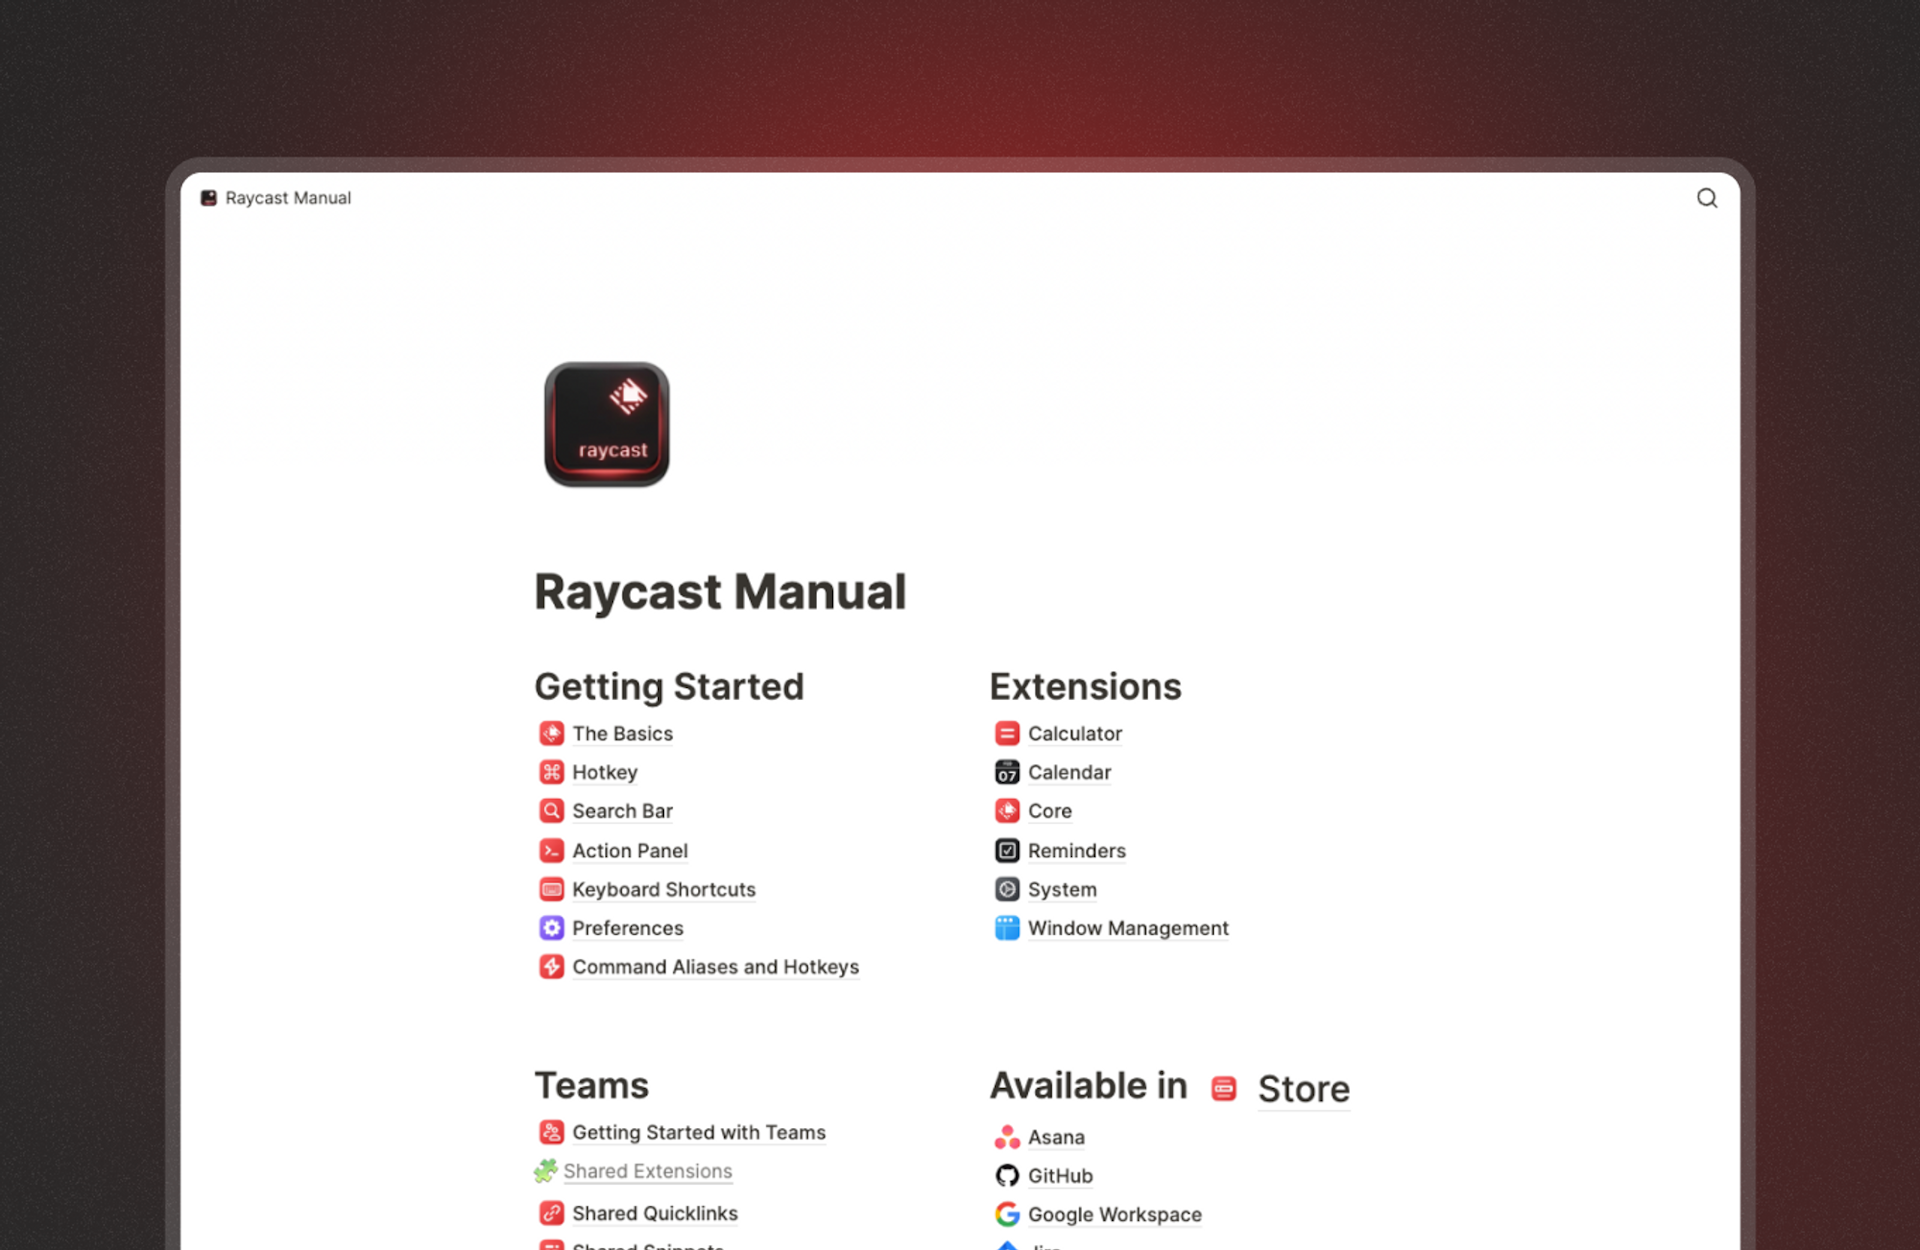 Raycast Manual